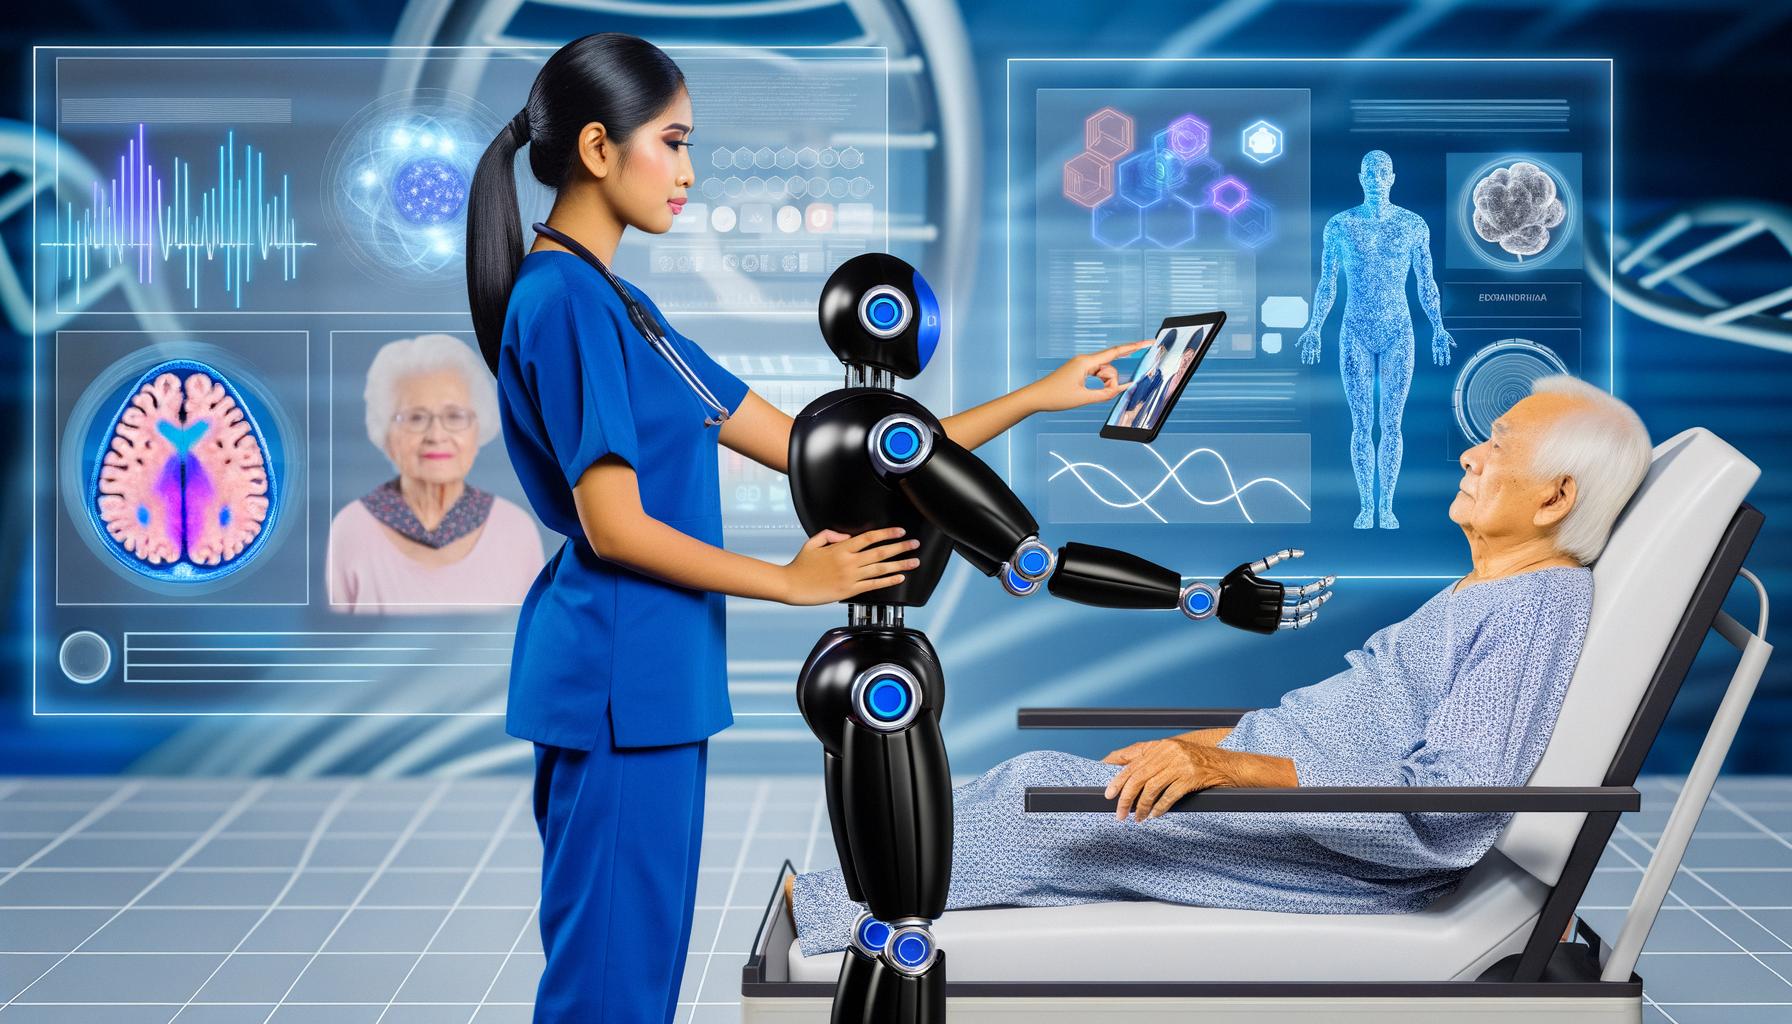 AI and digital tech transforming healthcare